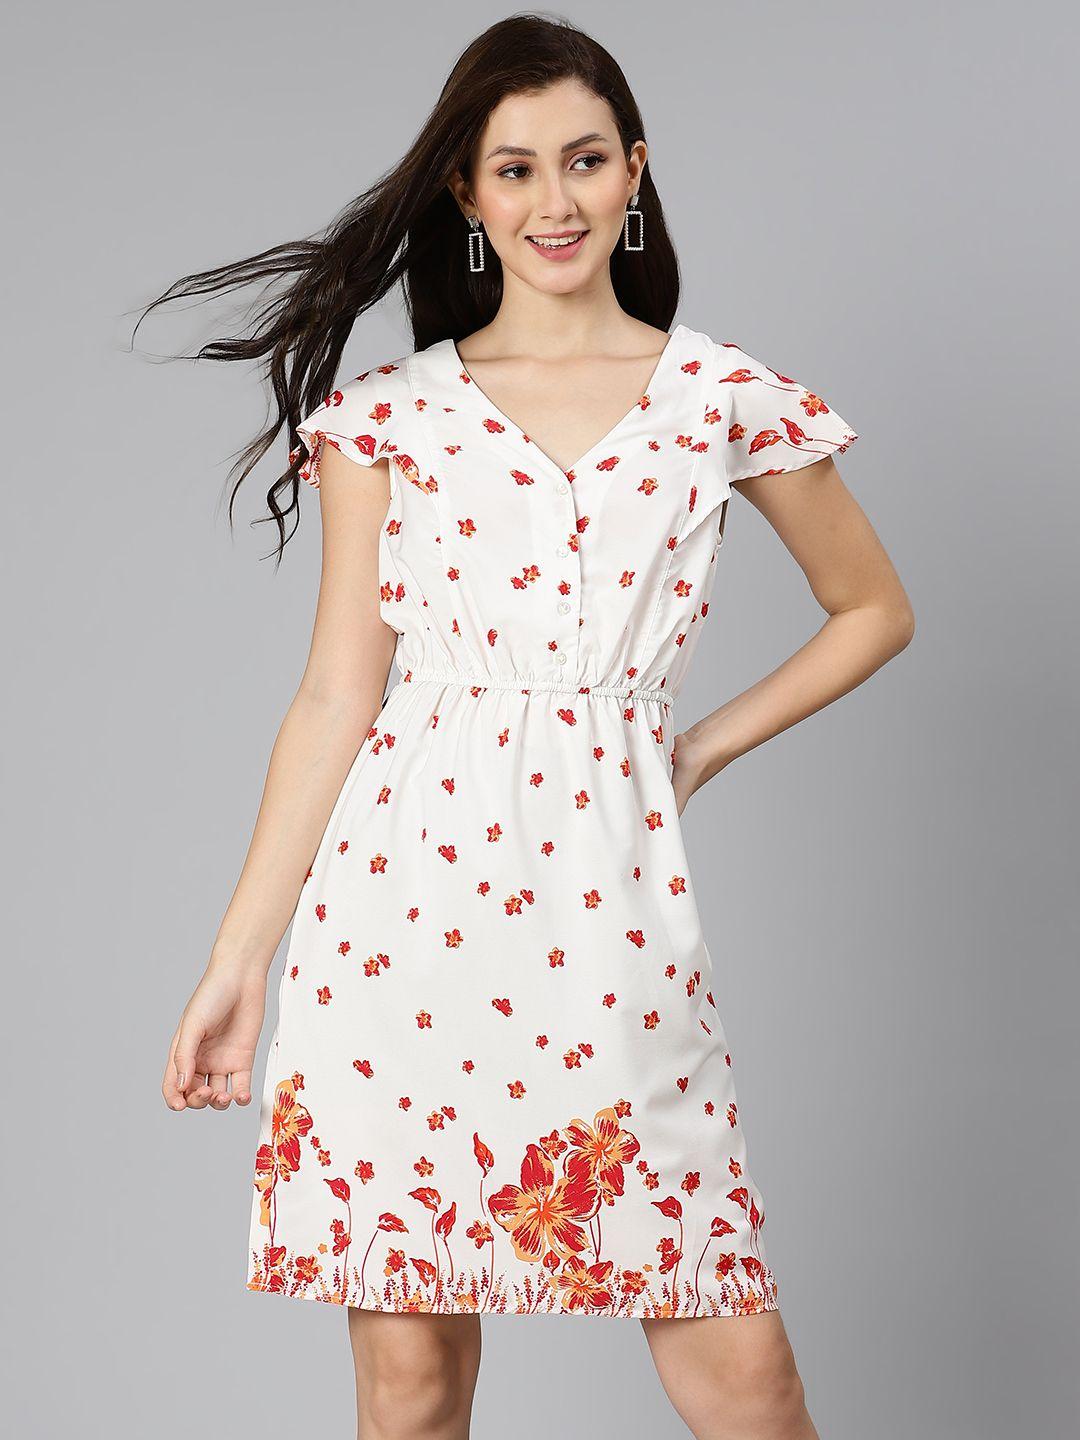 oxolloxo-white-&-red-floral-v-neck-satin-dress